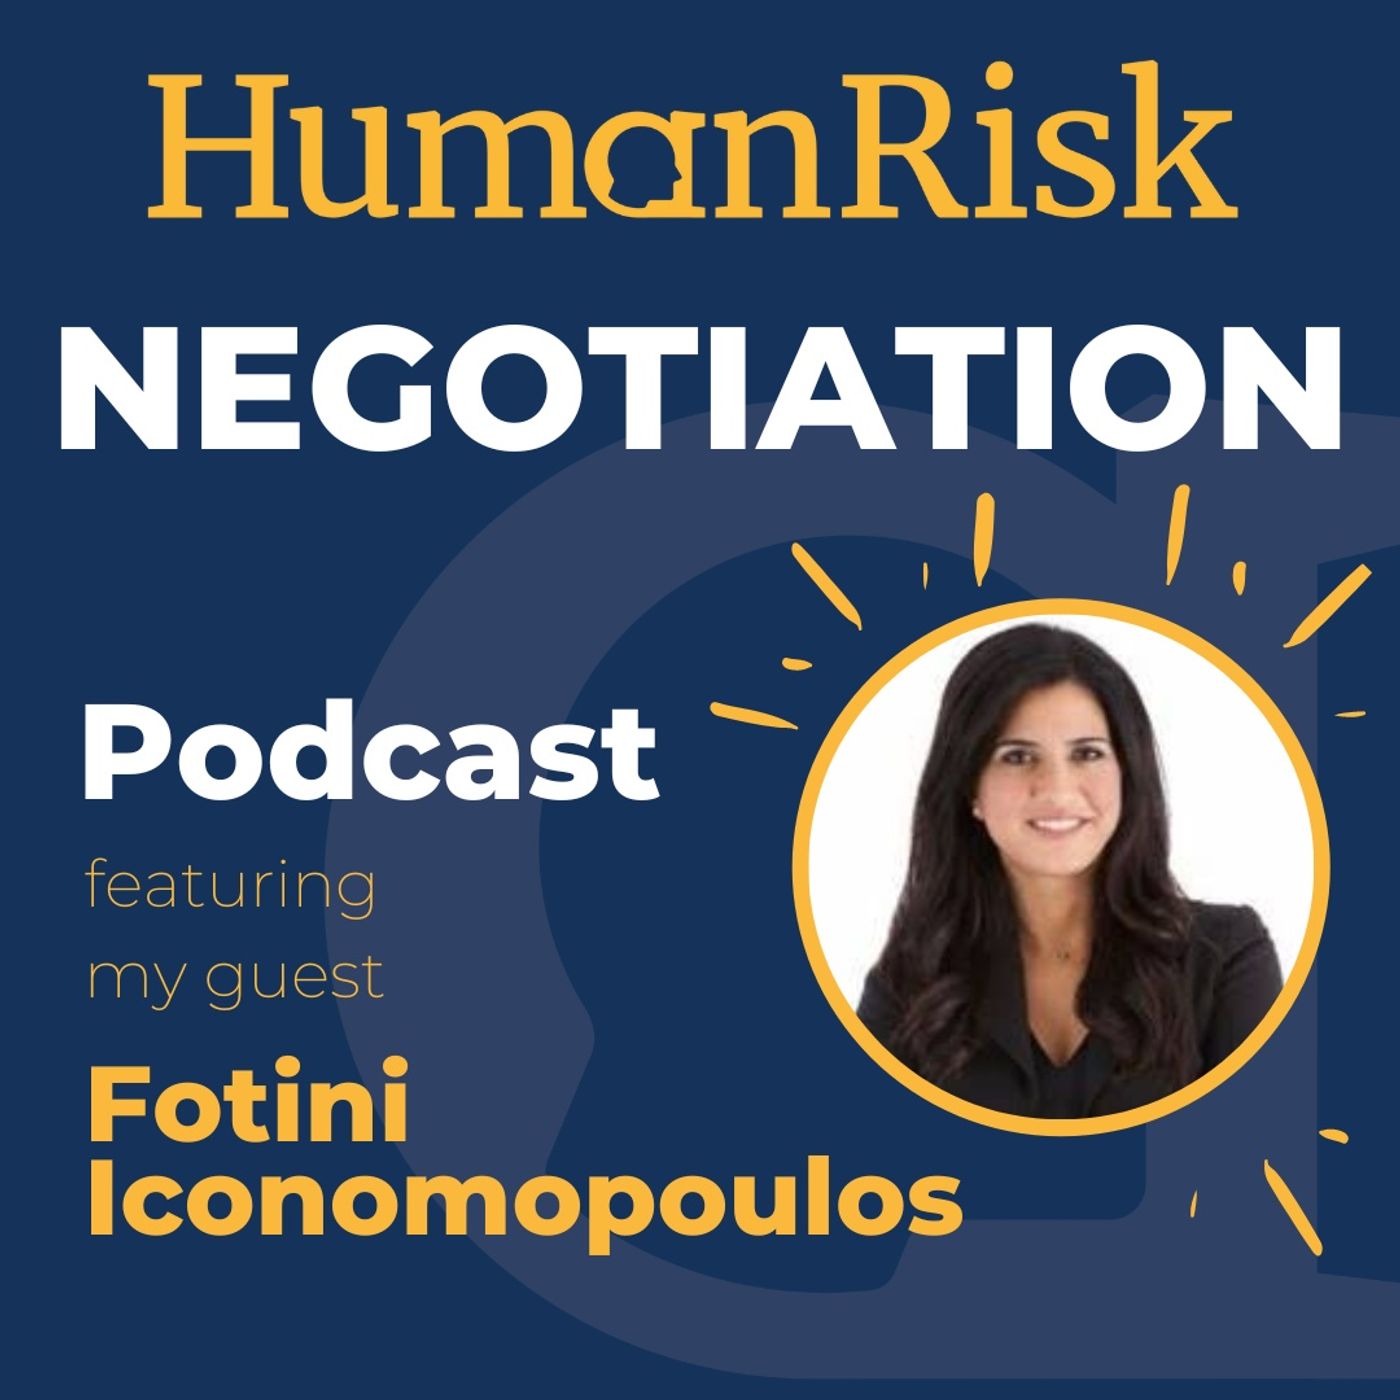 Fotini Iconomopoulos on Negotiation Image